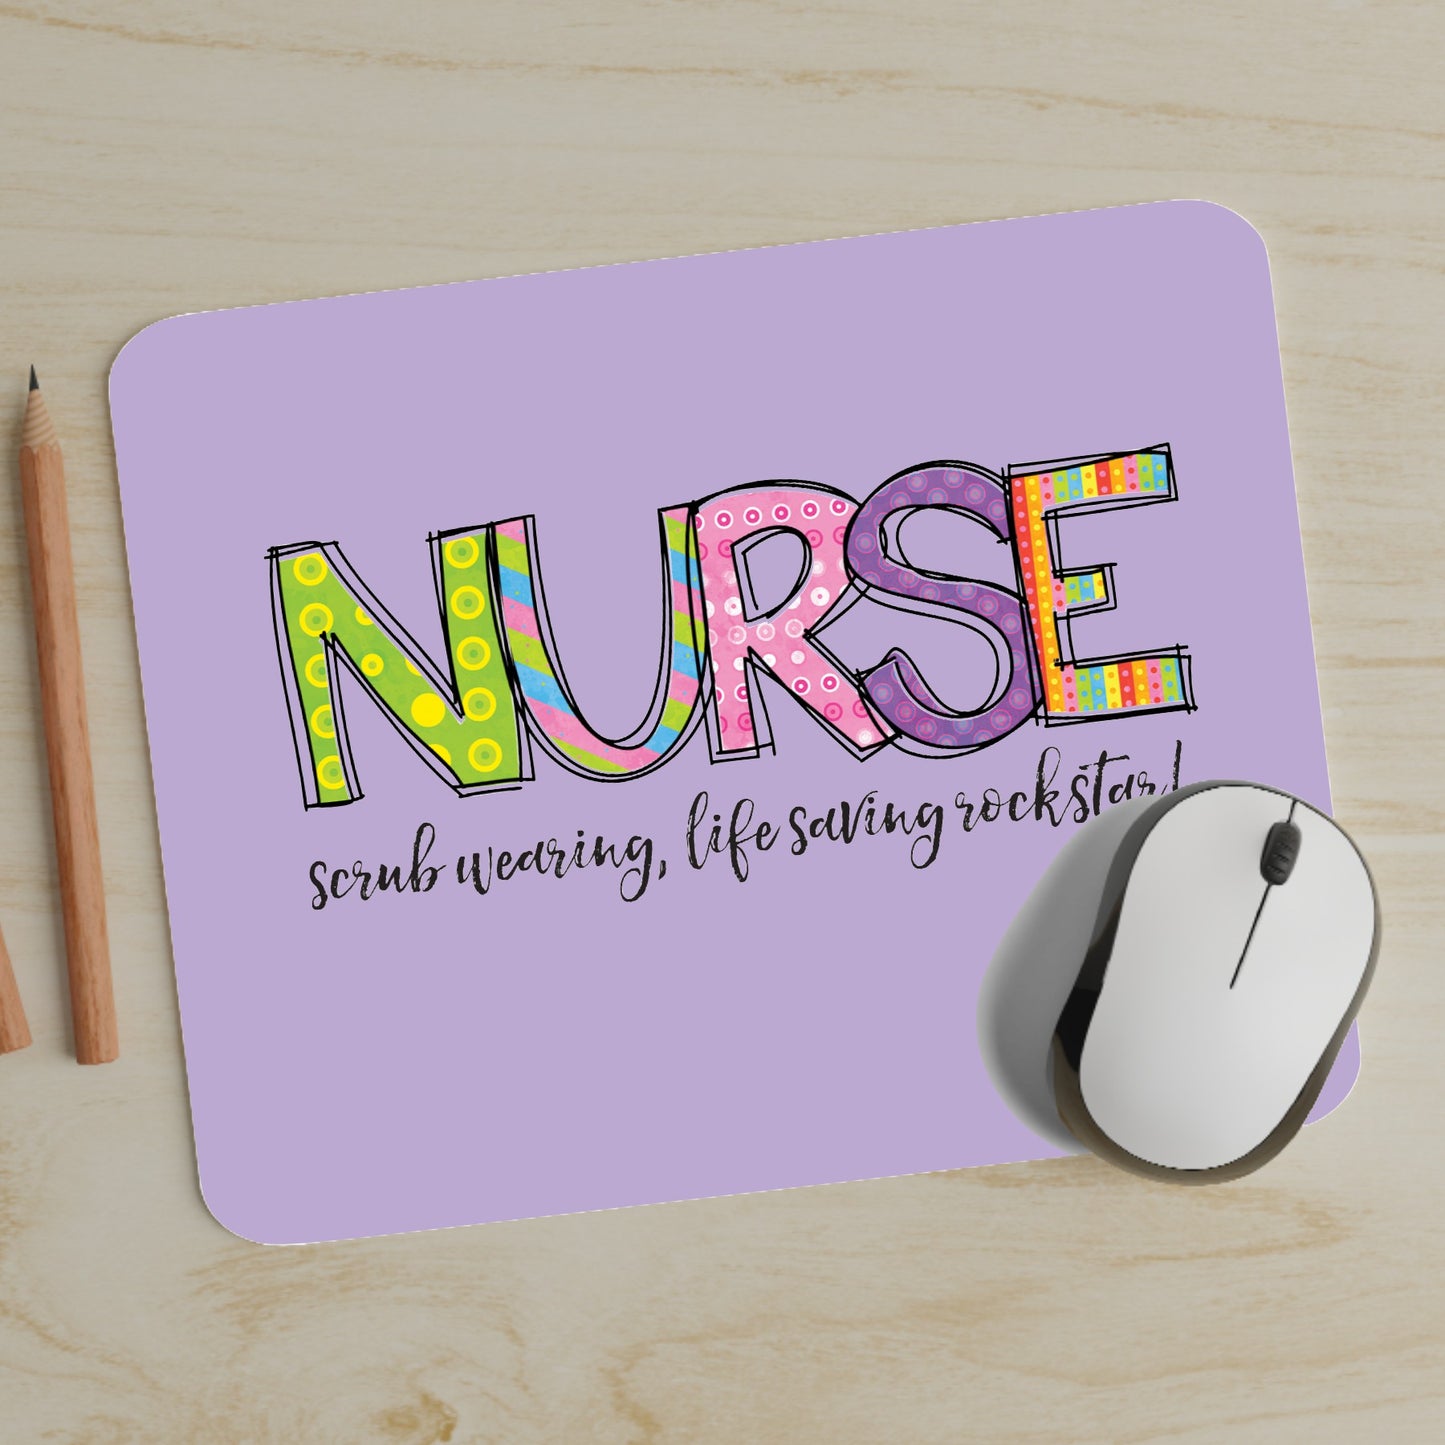 Colorful Nurse Mouse Pad